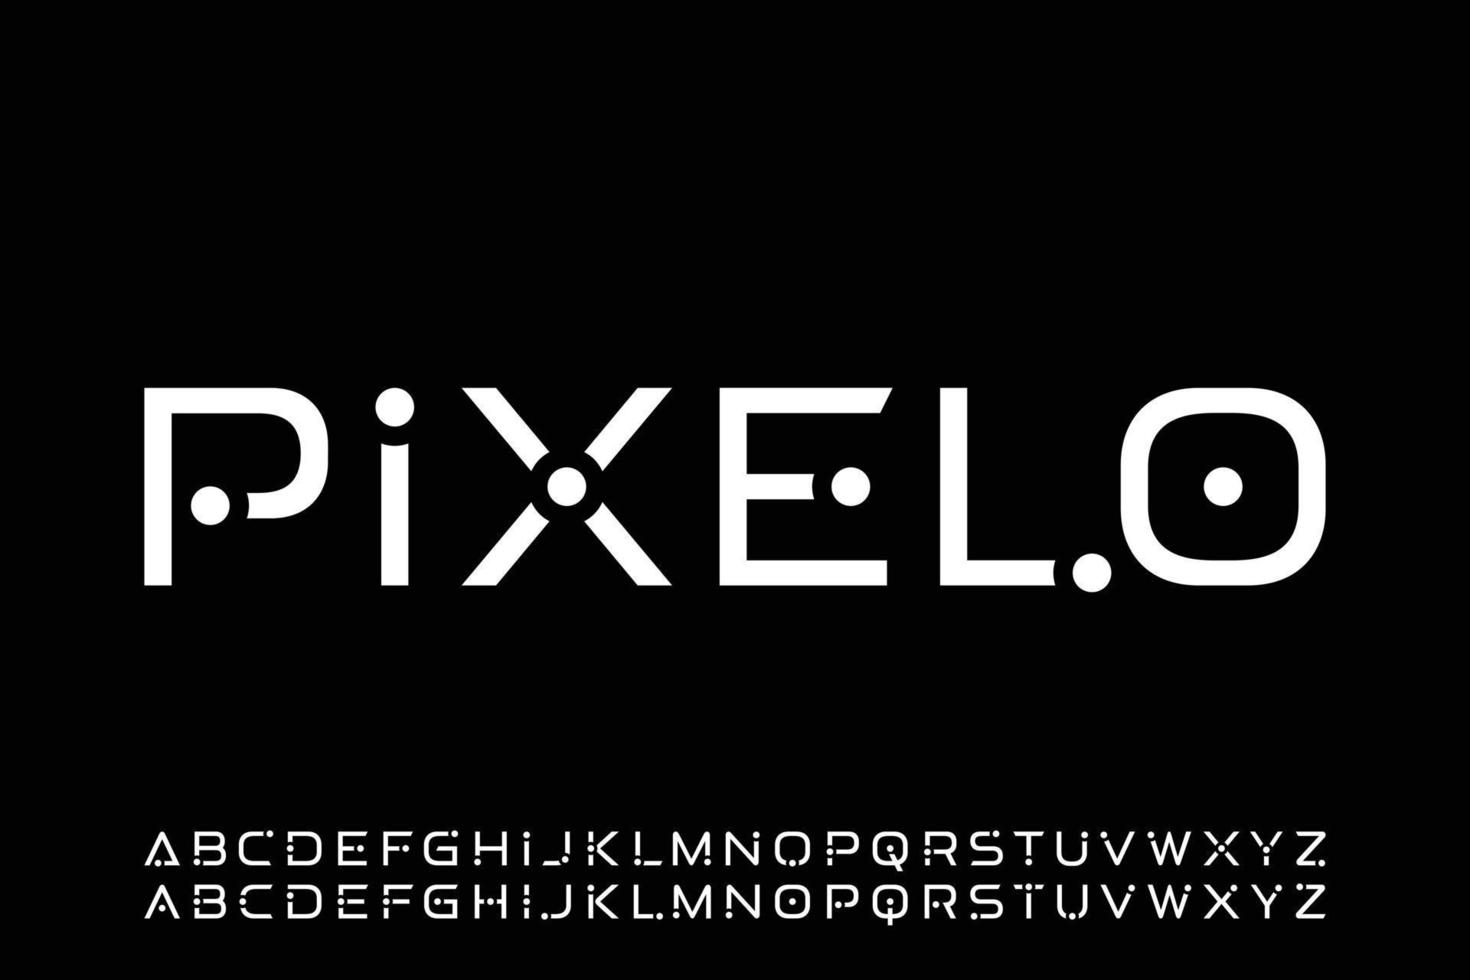 Modern sans serif and dot alphabets font vector with alternate